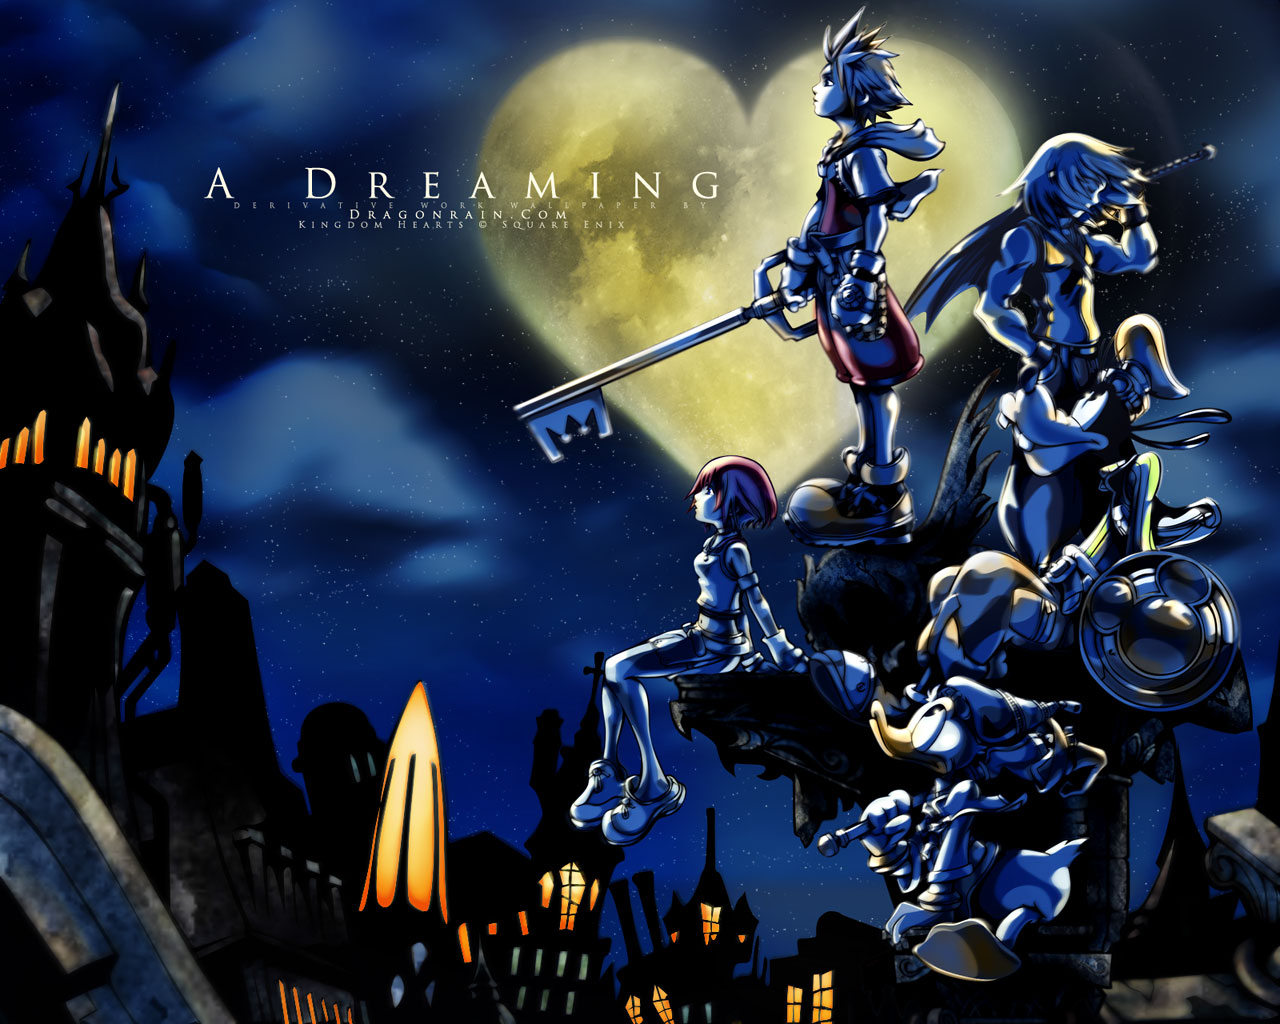 3. Kingdom Hearts